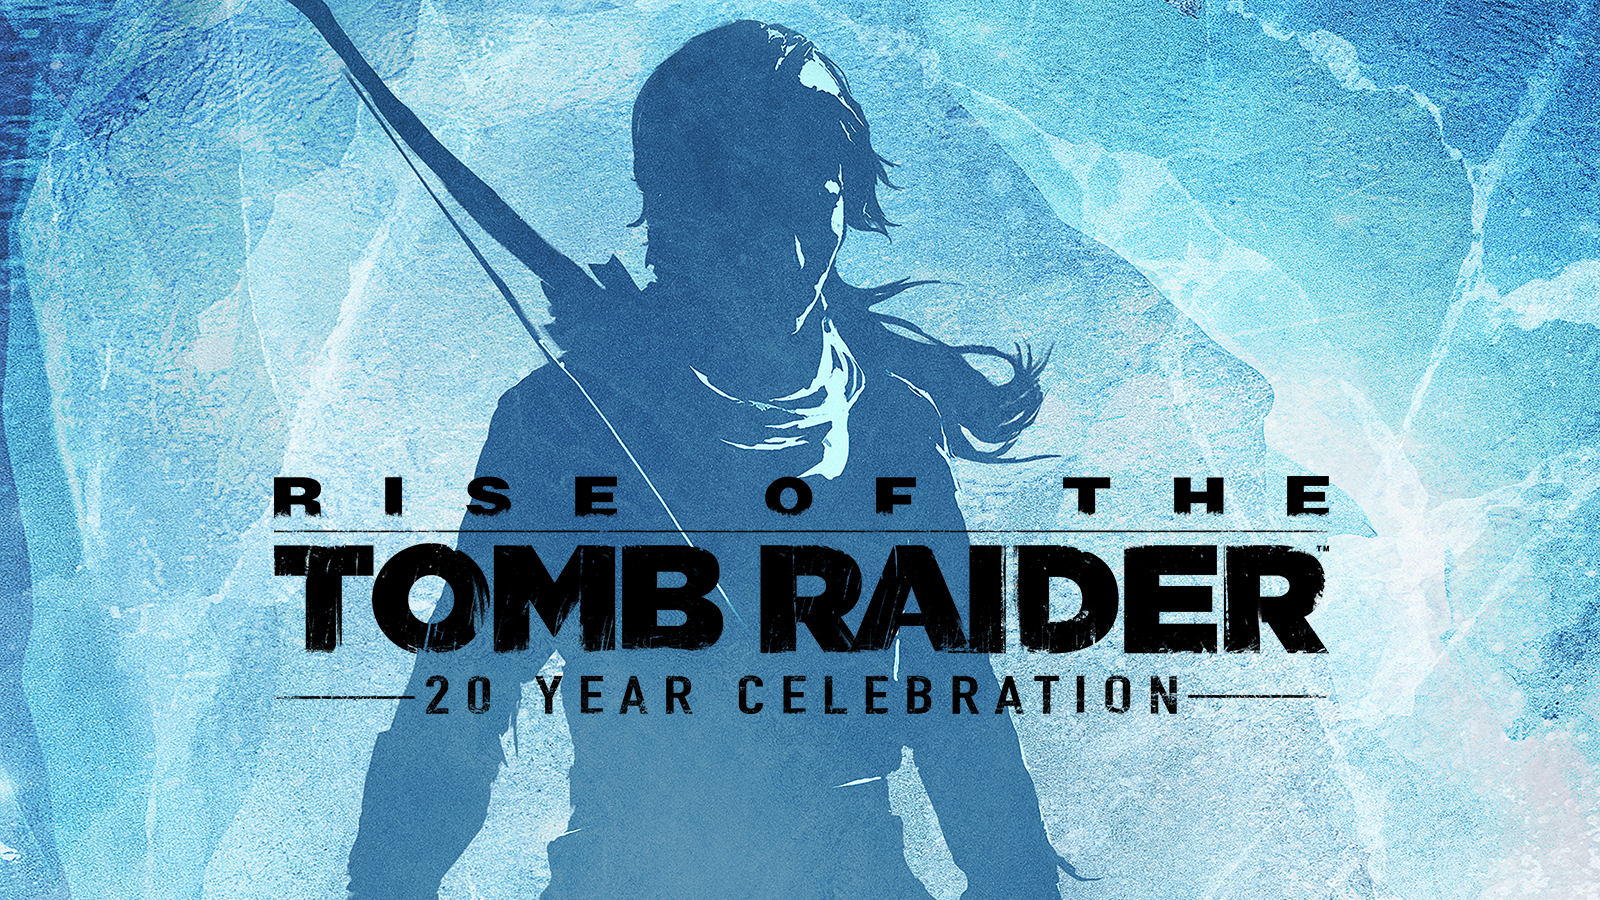 rise of the tom raider 20 year